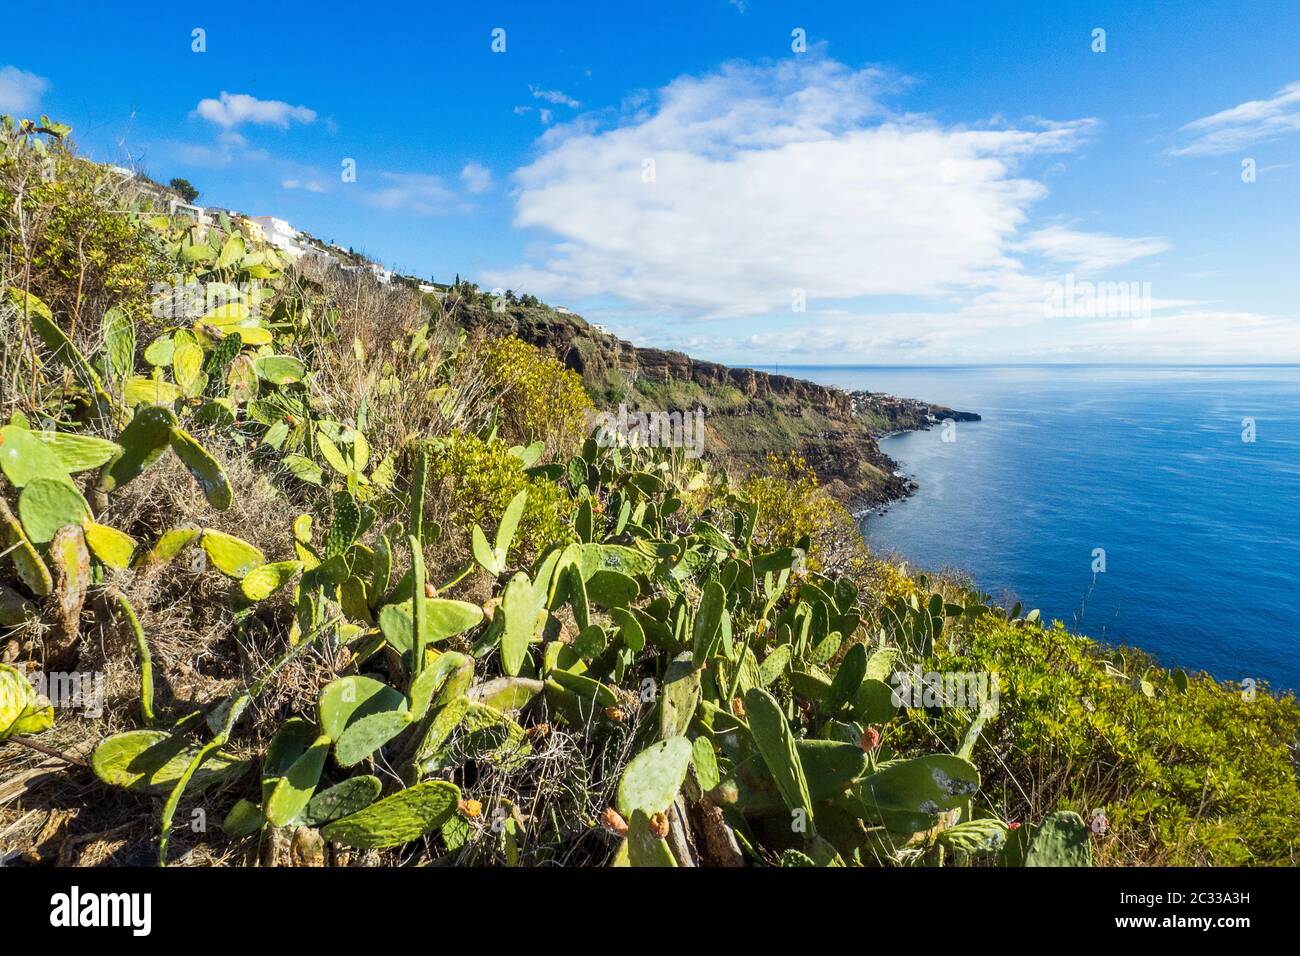 Portogallo, Isole Canarie su Madeira - Canico a Ponta do Garajau Foto Stock